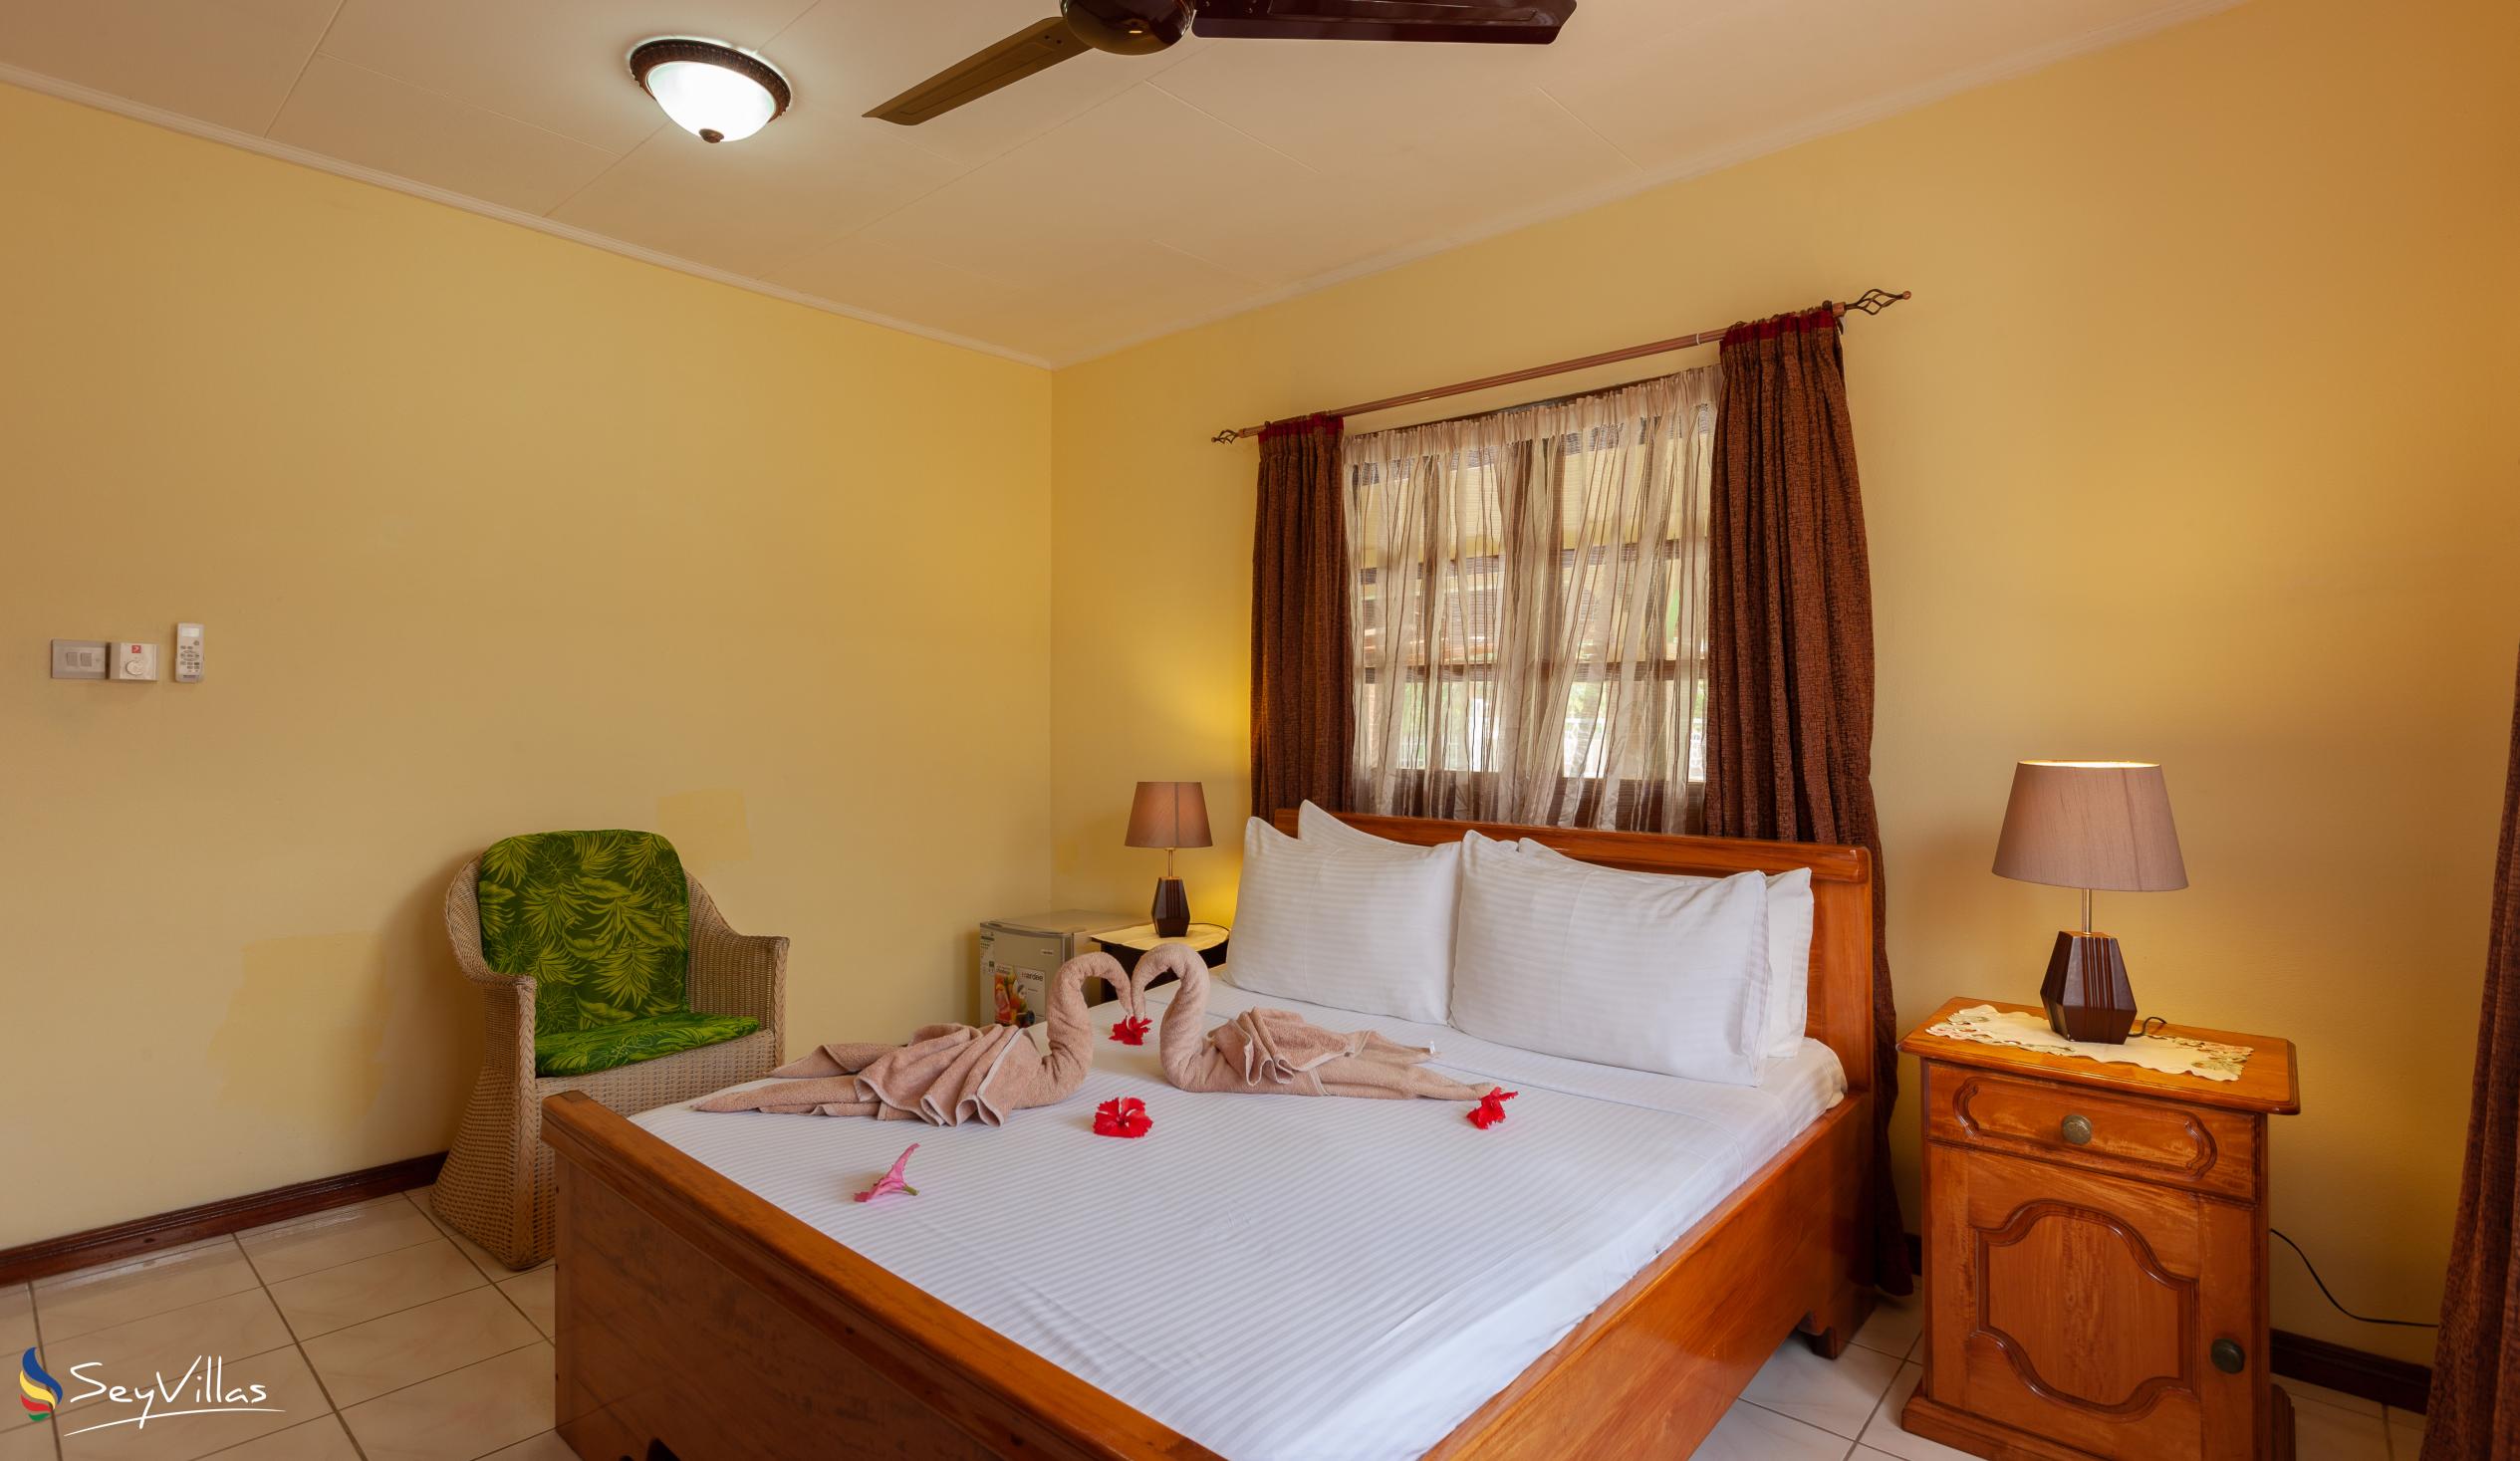 Photo 75: Villa Bananier - Double Room Villa Annex - Praslin (Seychelles)